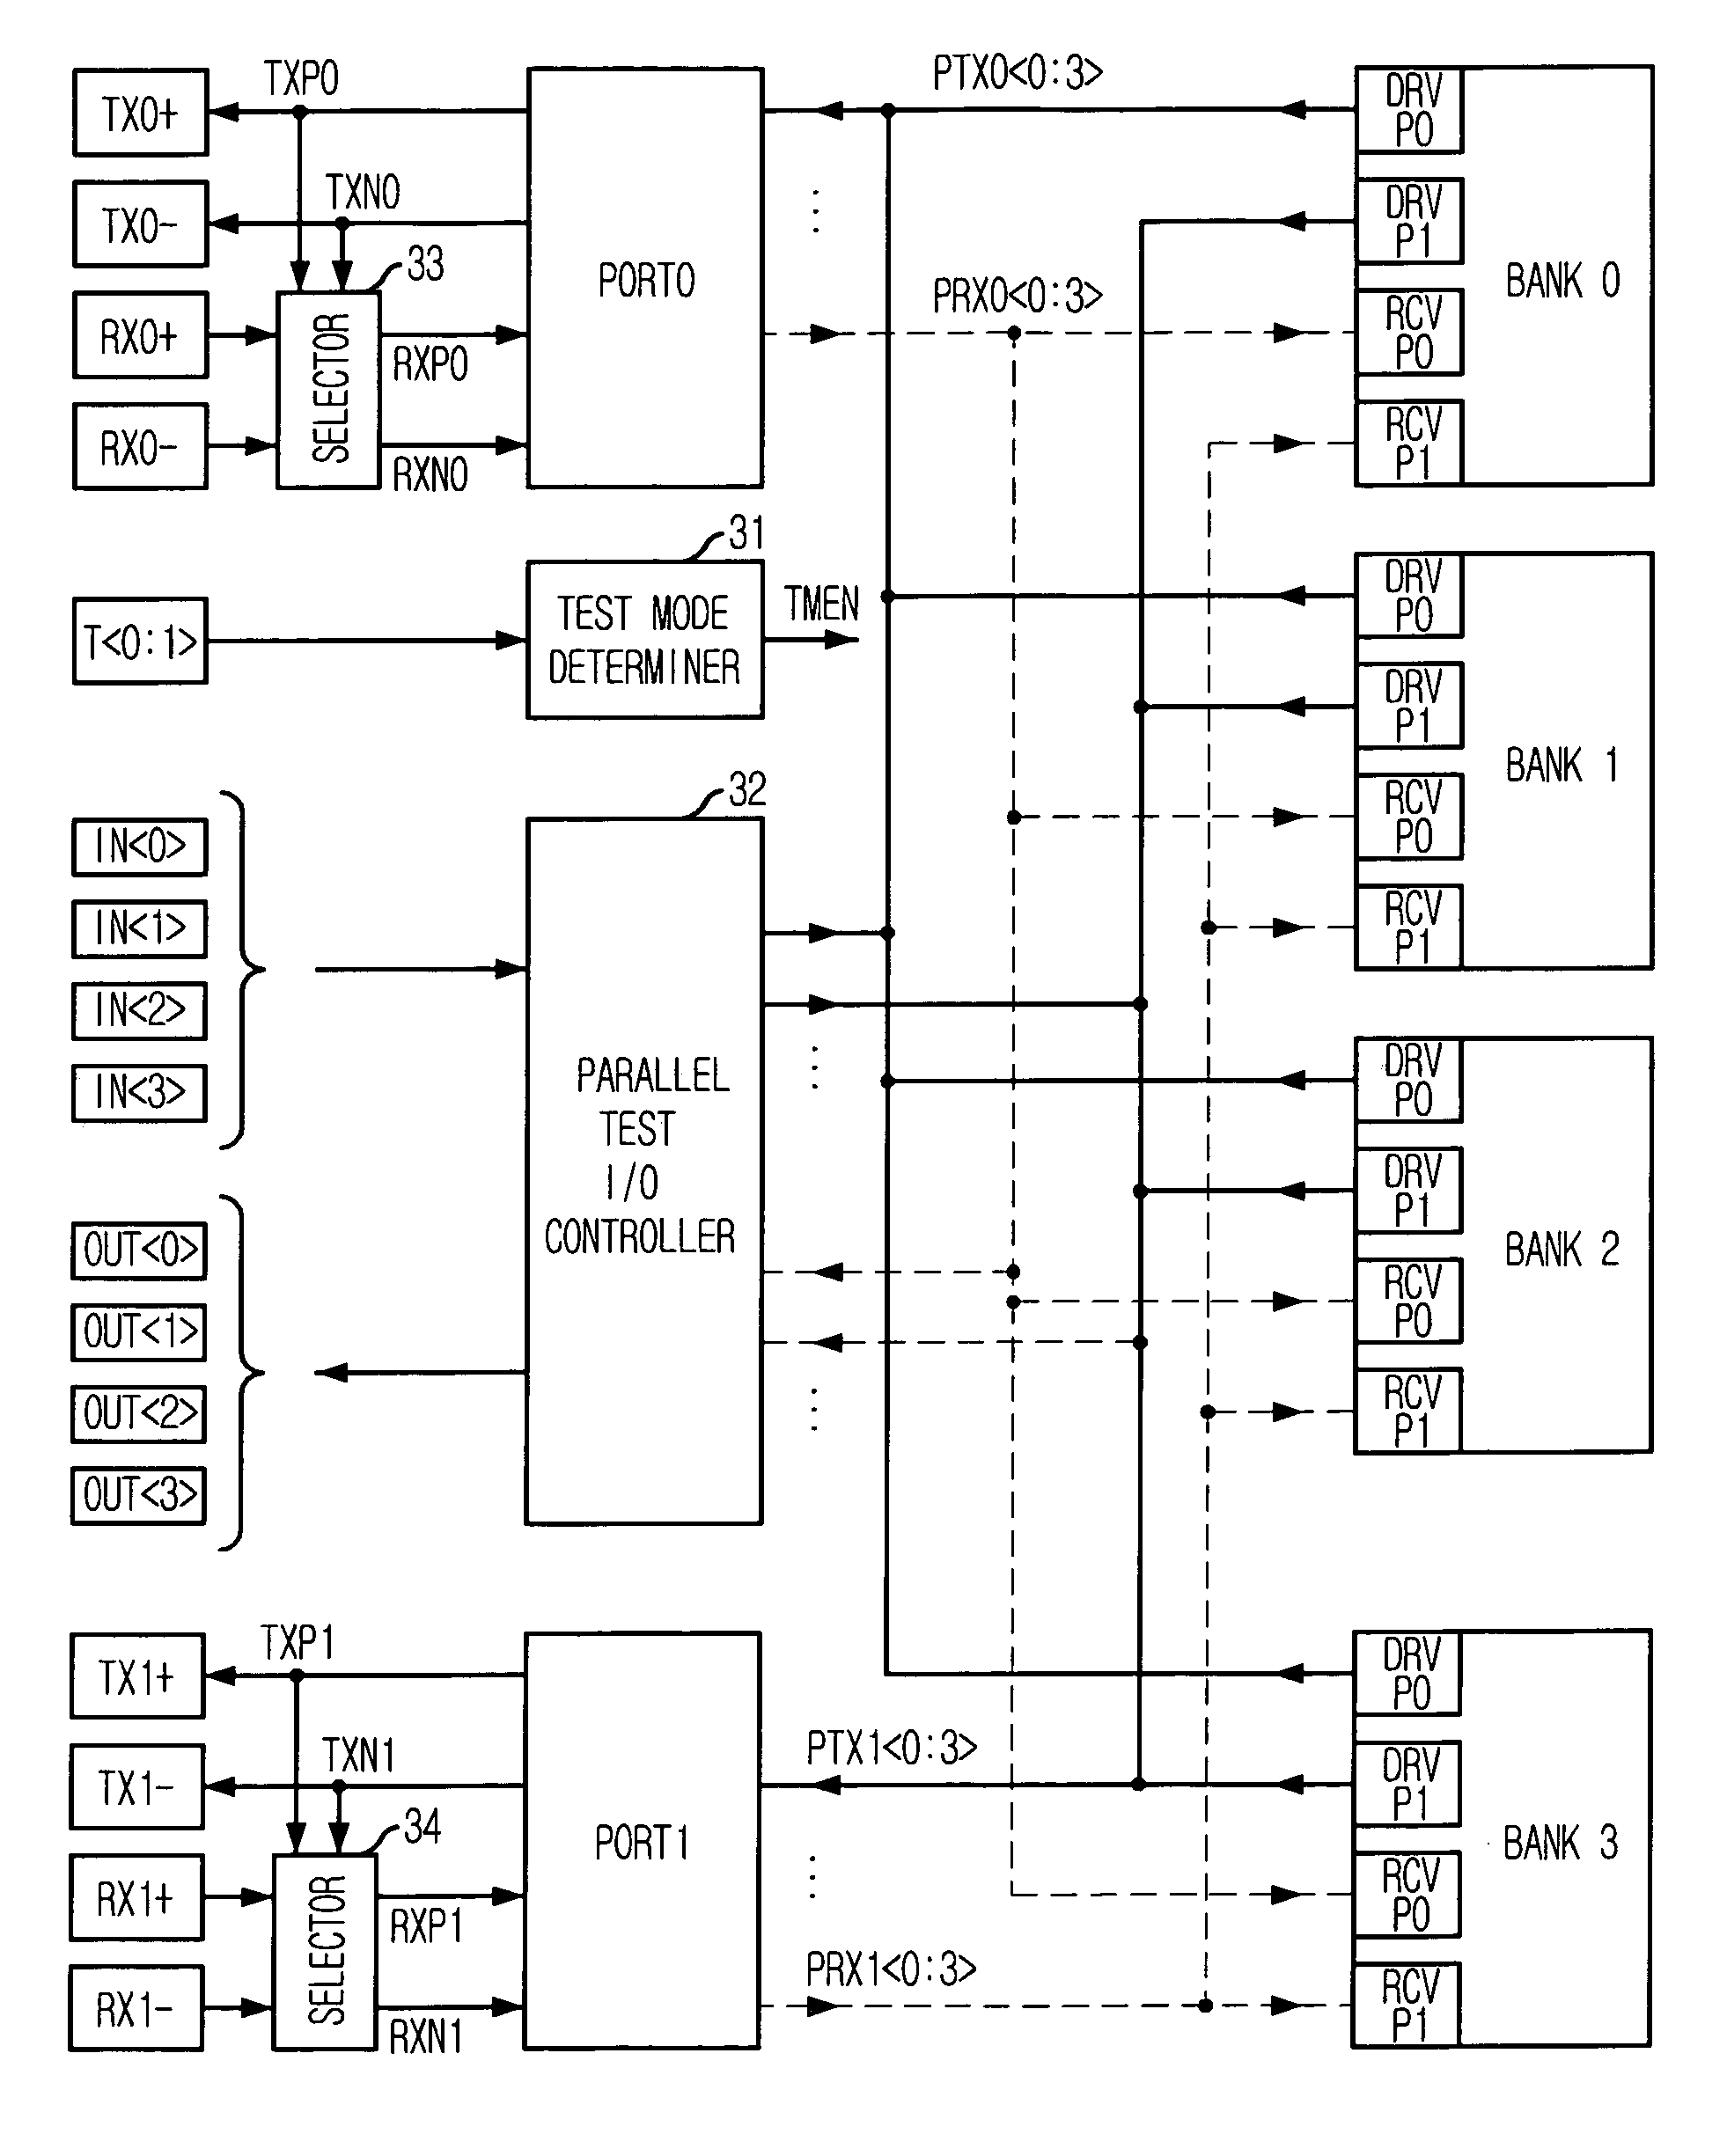 Multi-port semiconductor memory device